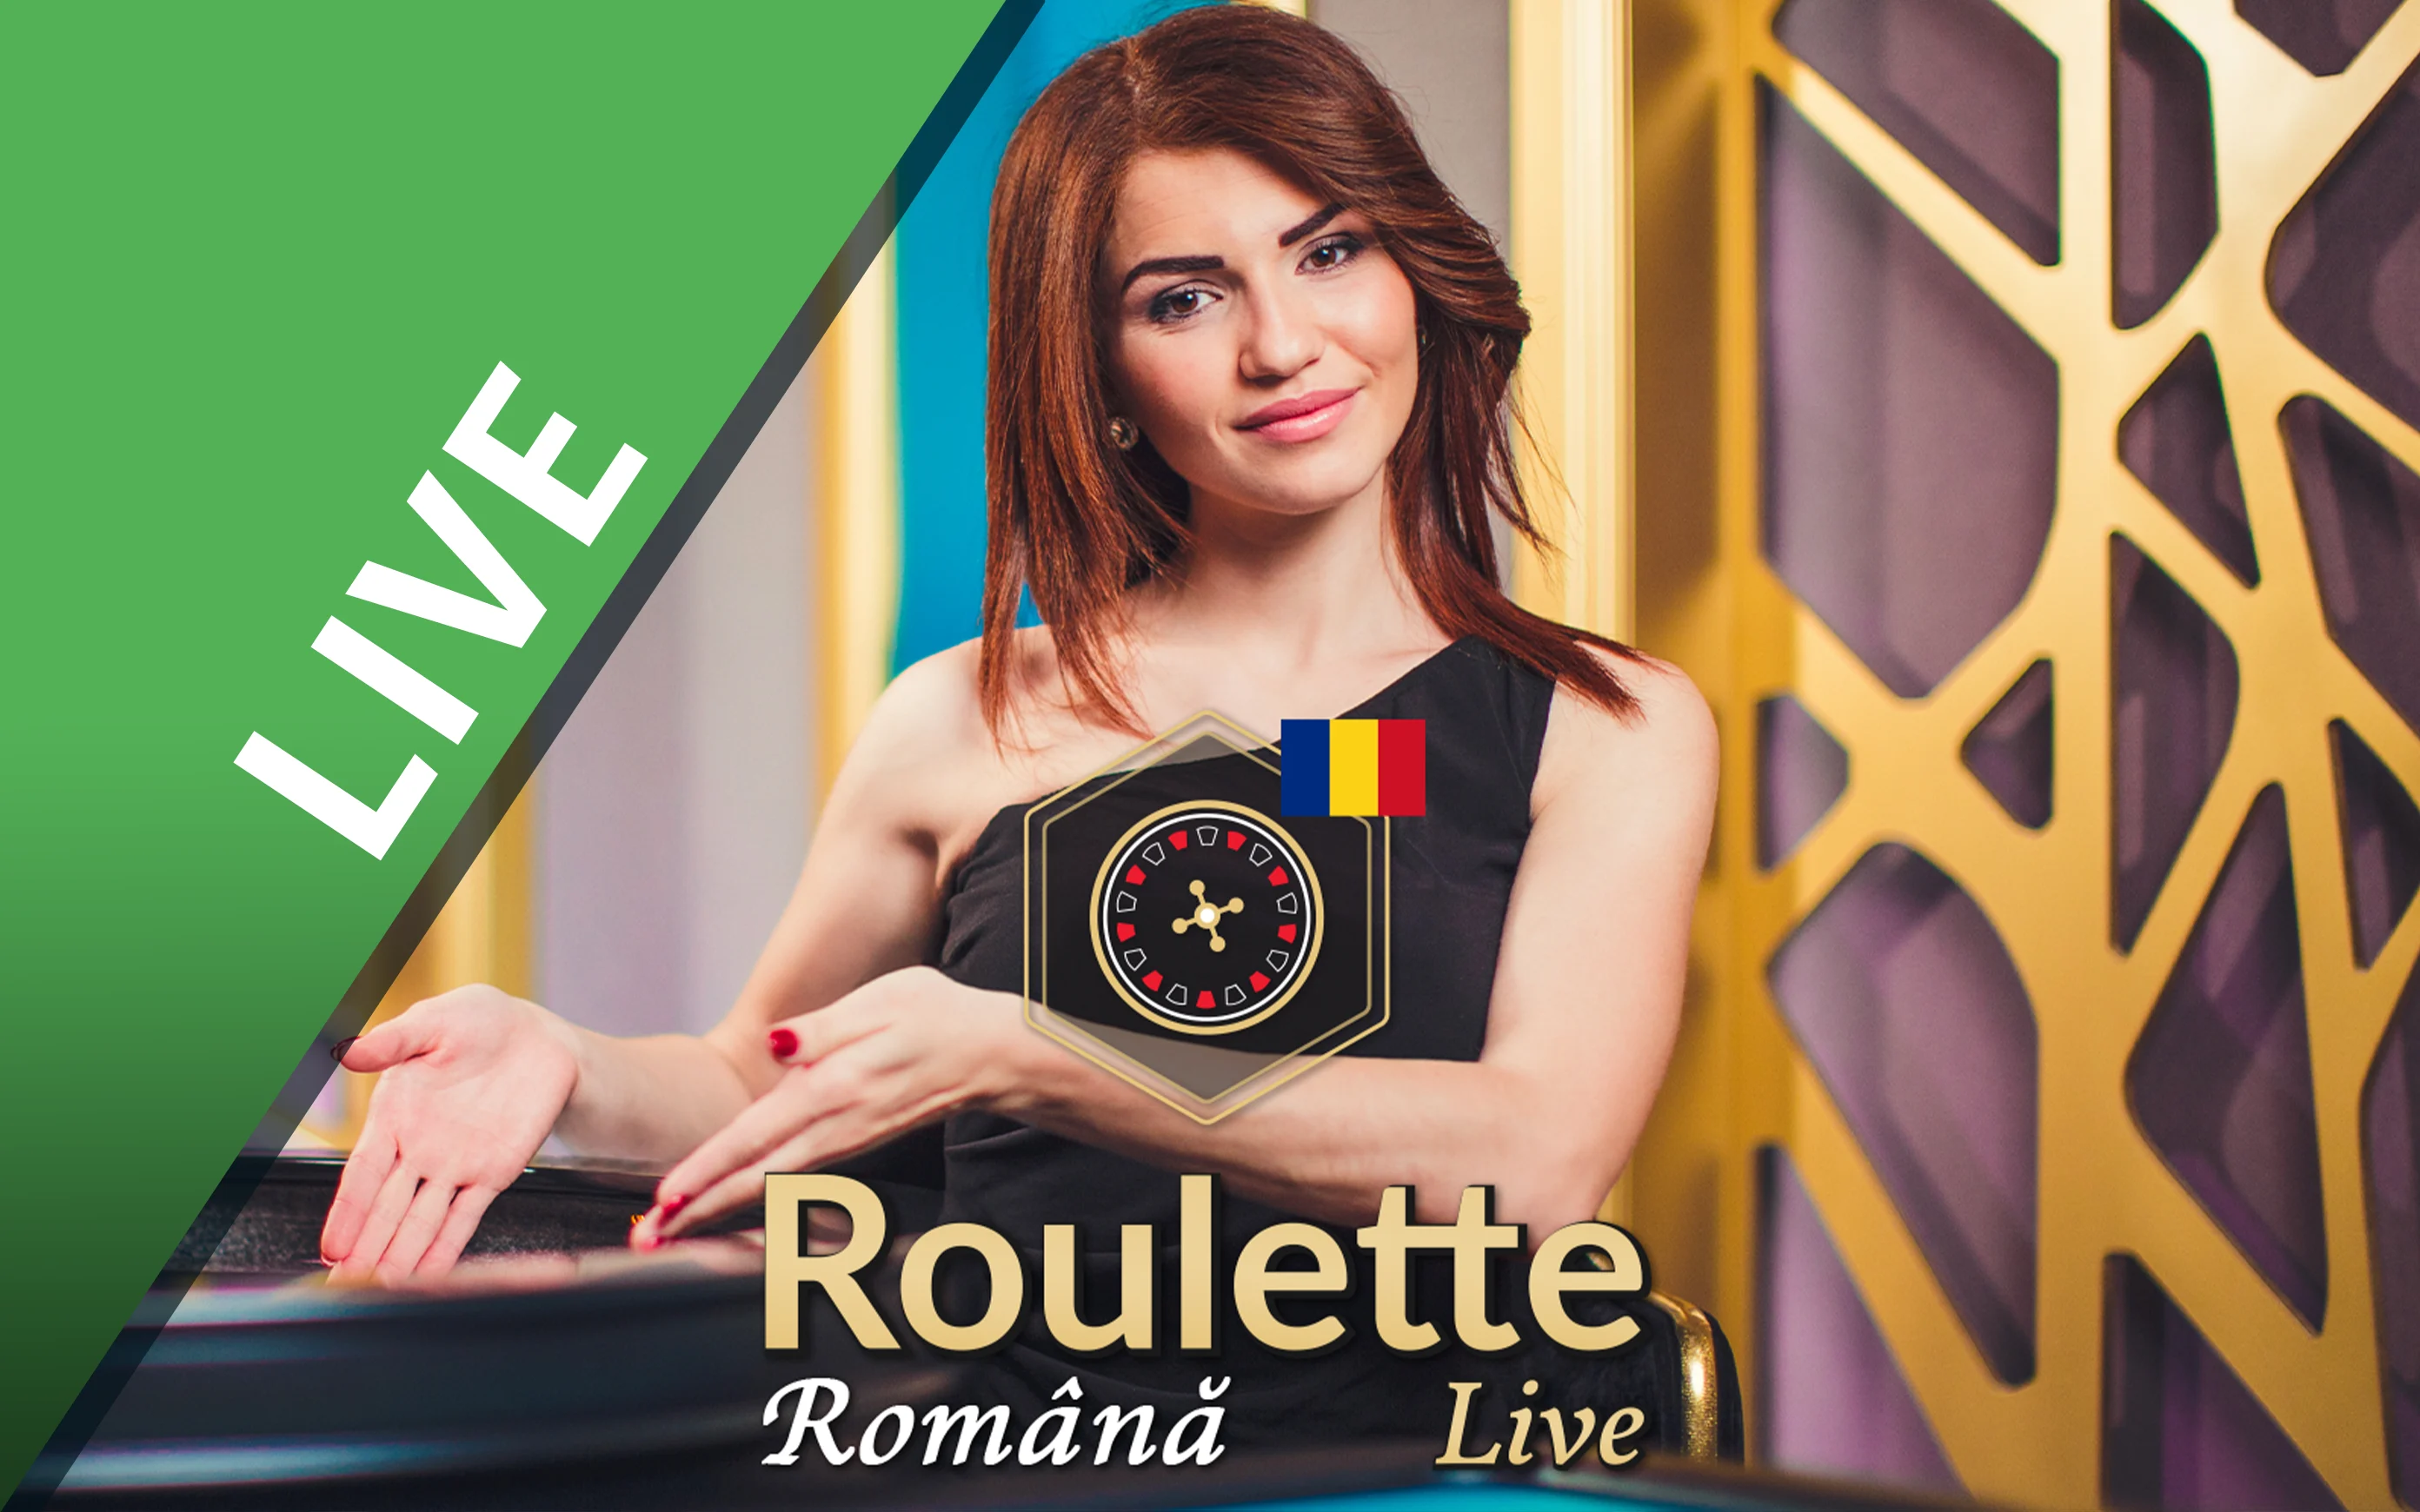 Jogue Bucharest Roulette no casino online Starcasino.be 